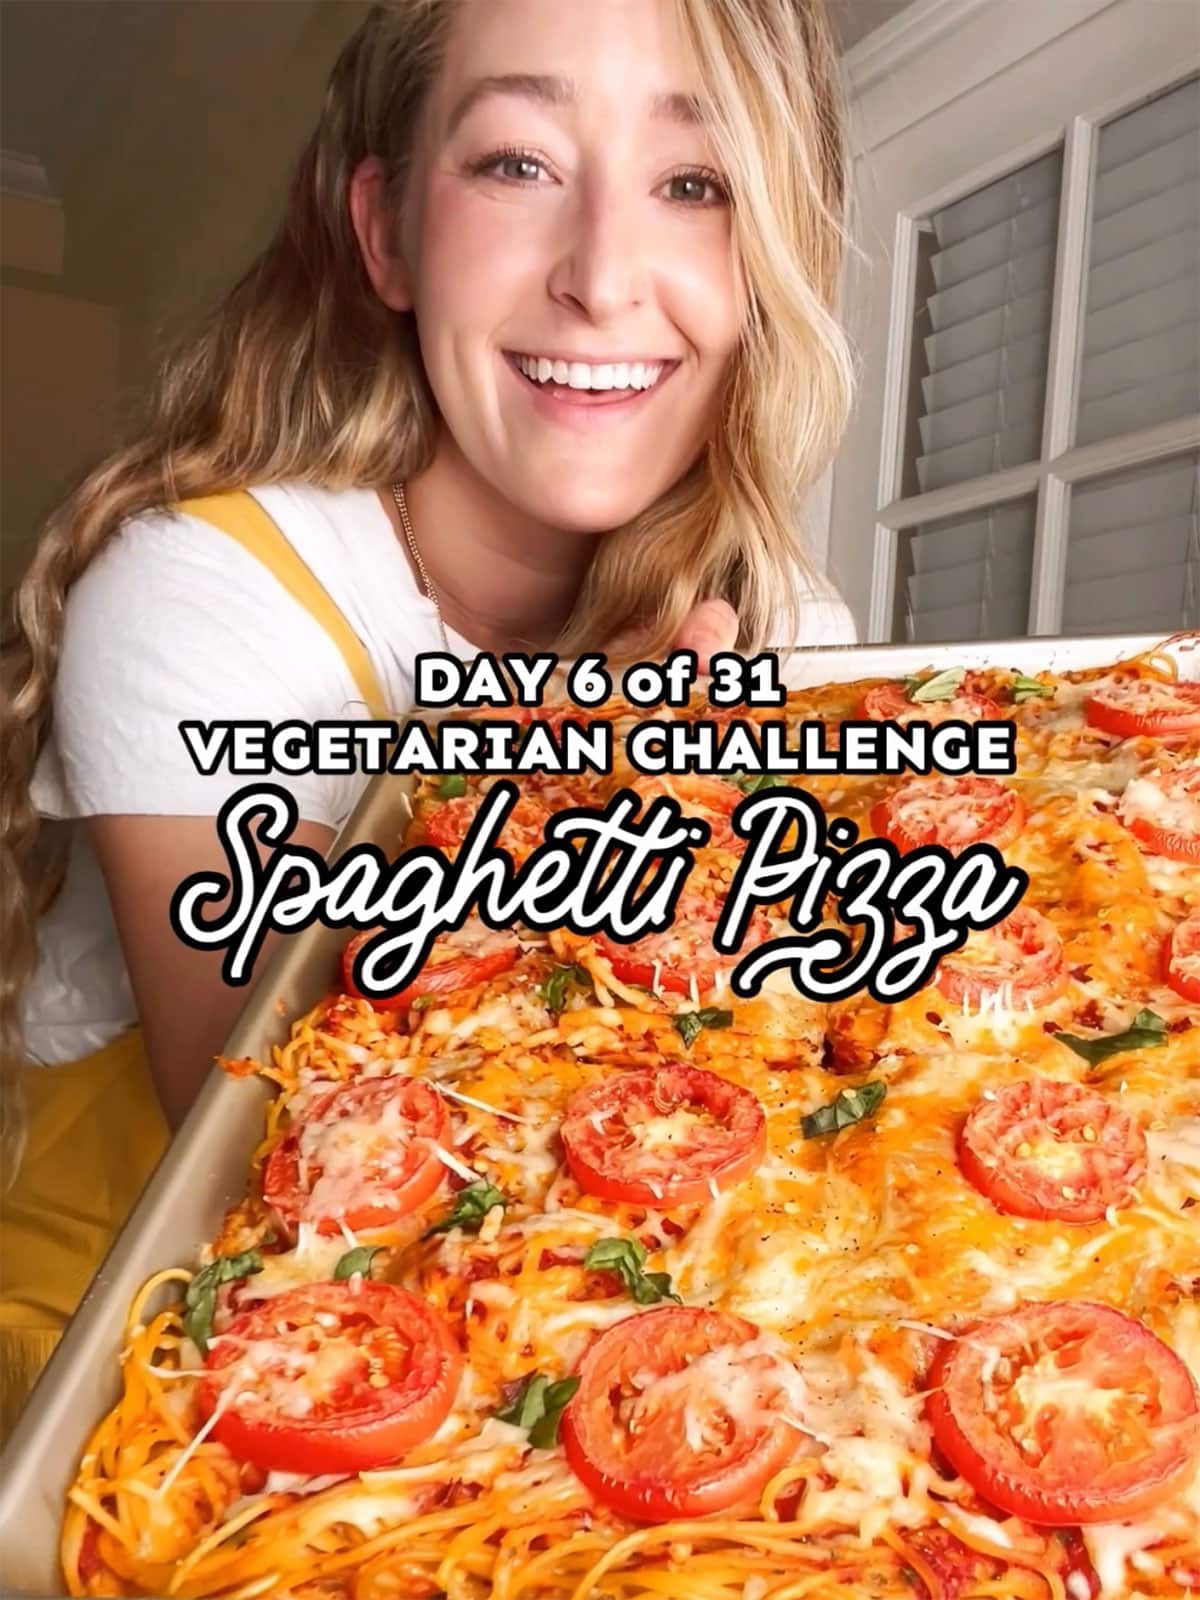 Girl holding pan of spaghetti pizza.